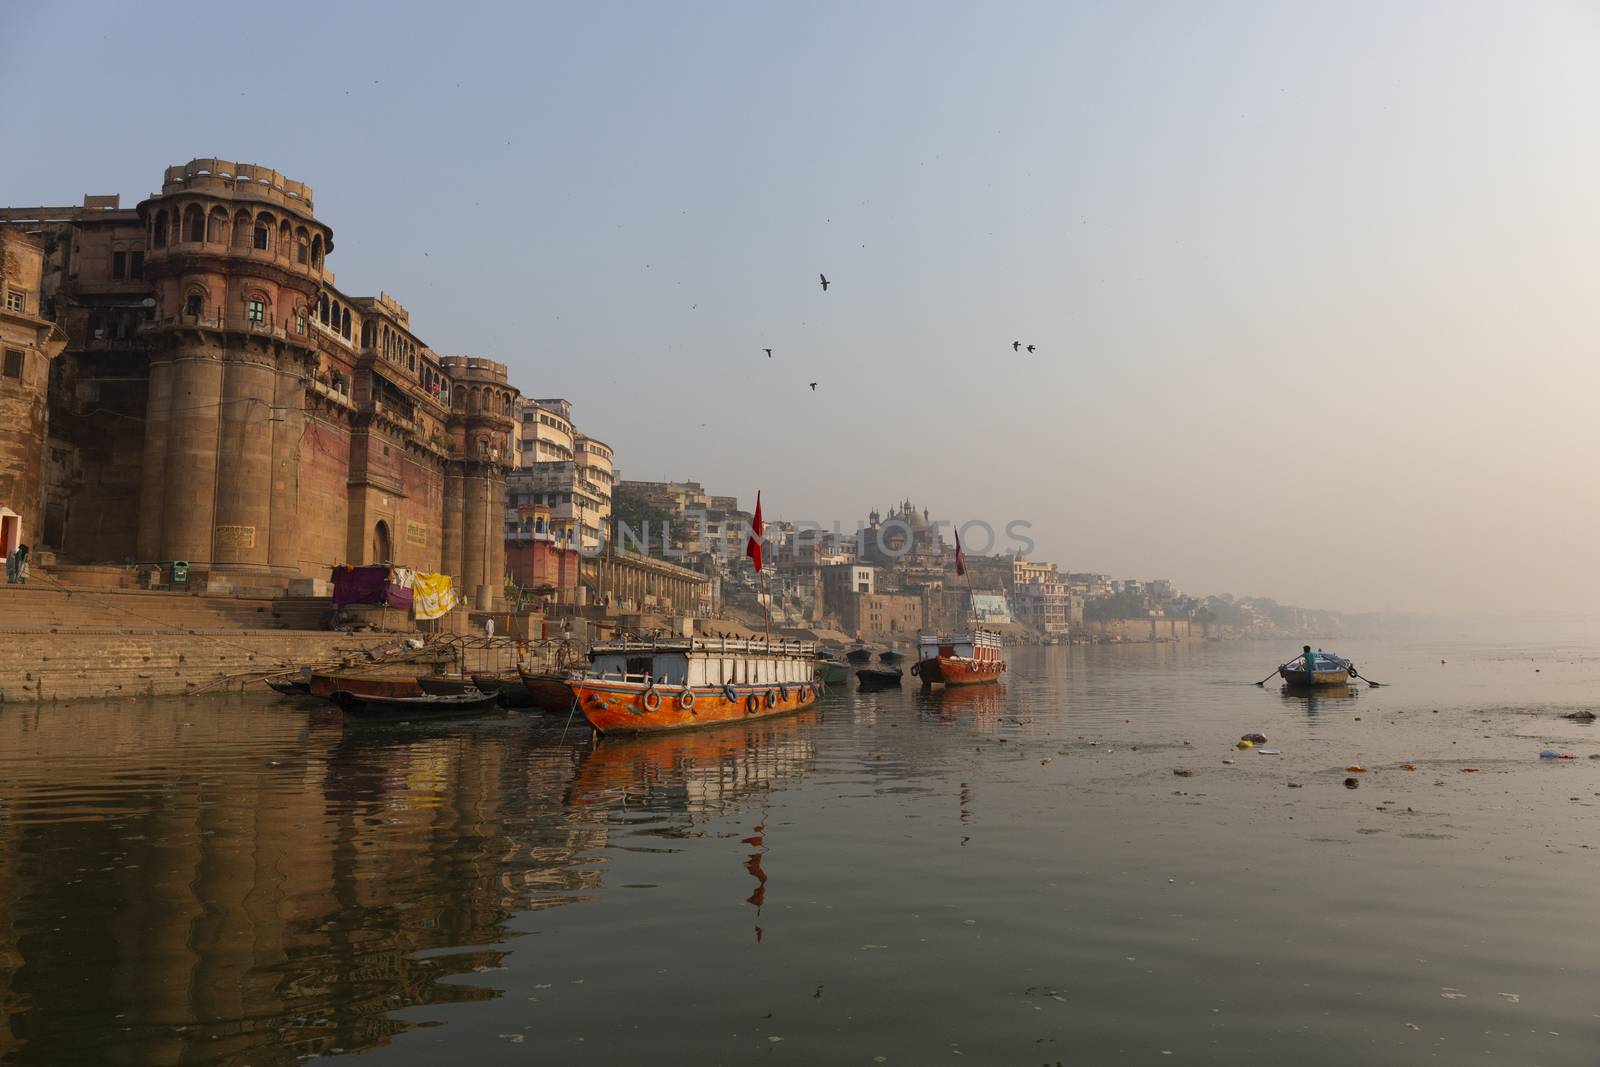 Morning view of Ganges river in Varanasi, India. Ghats with boats and people. Popular landmark, Varanasi, India